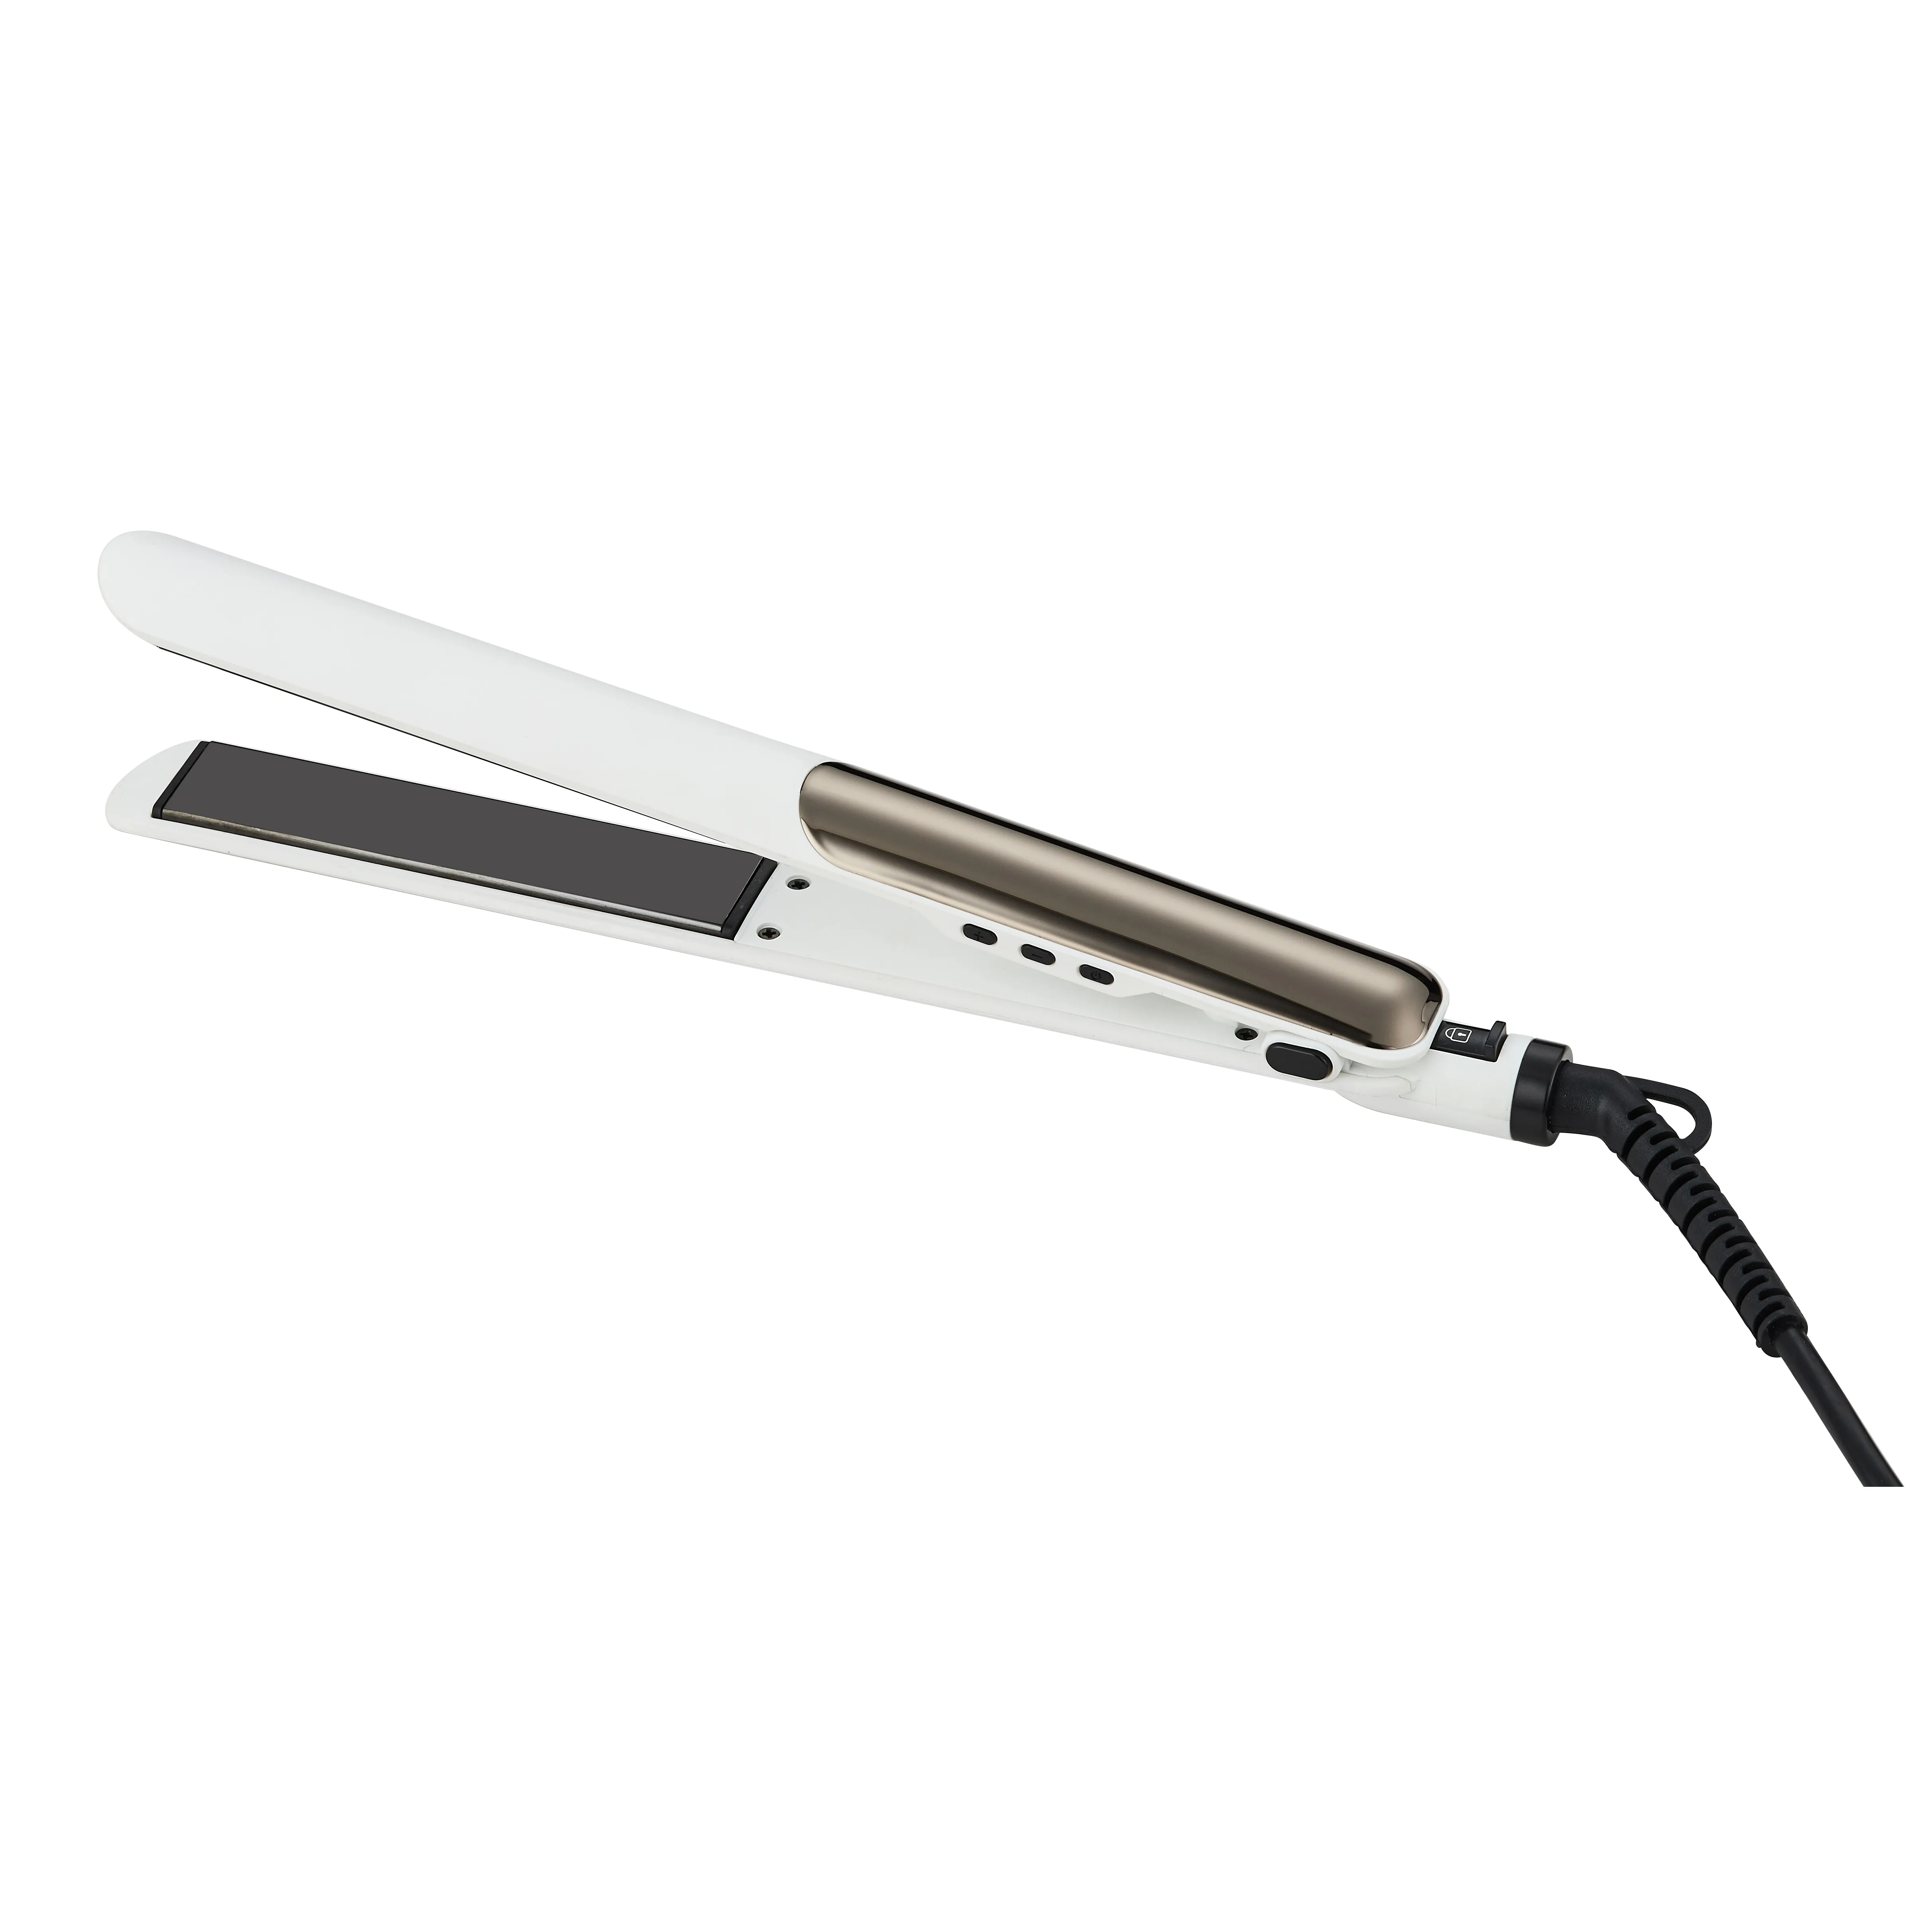 Hair Straightener Flat Iron Straightener And Curler For All Hairstyles Fast Heating Gift For Girls Women Hair Straightener